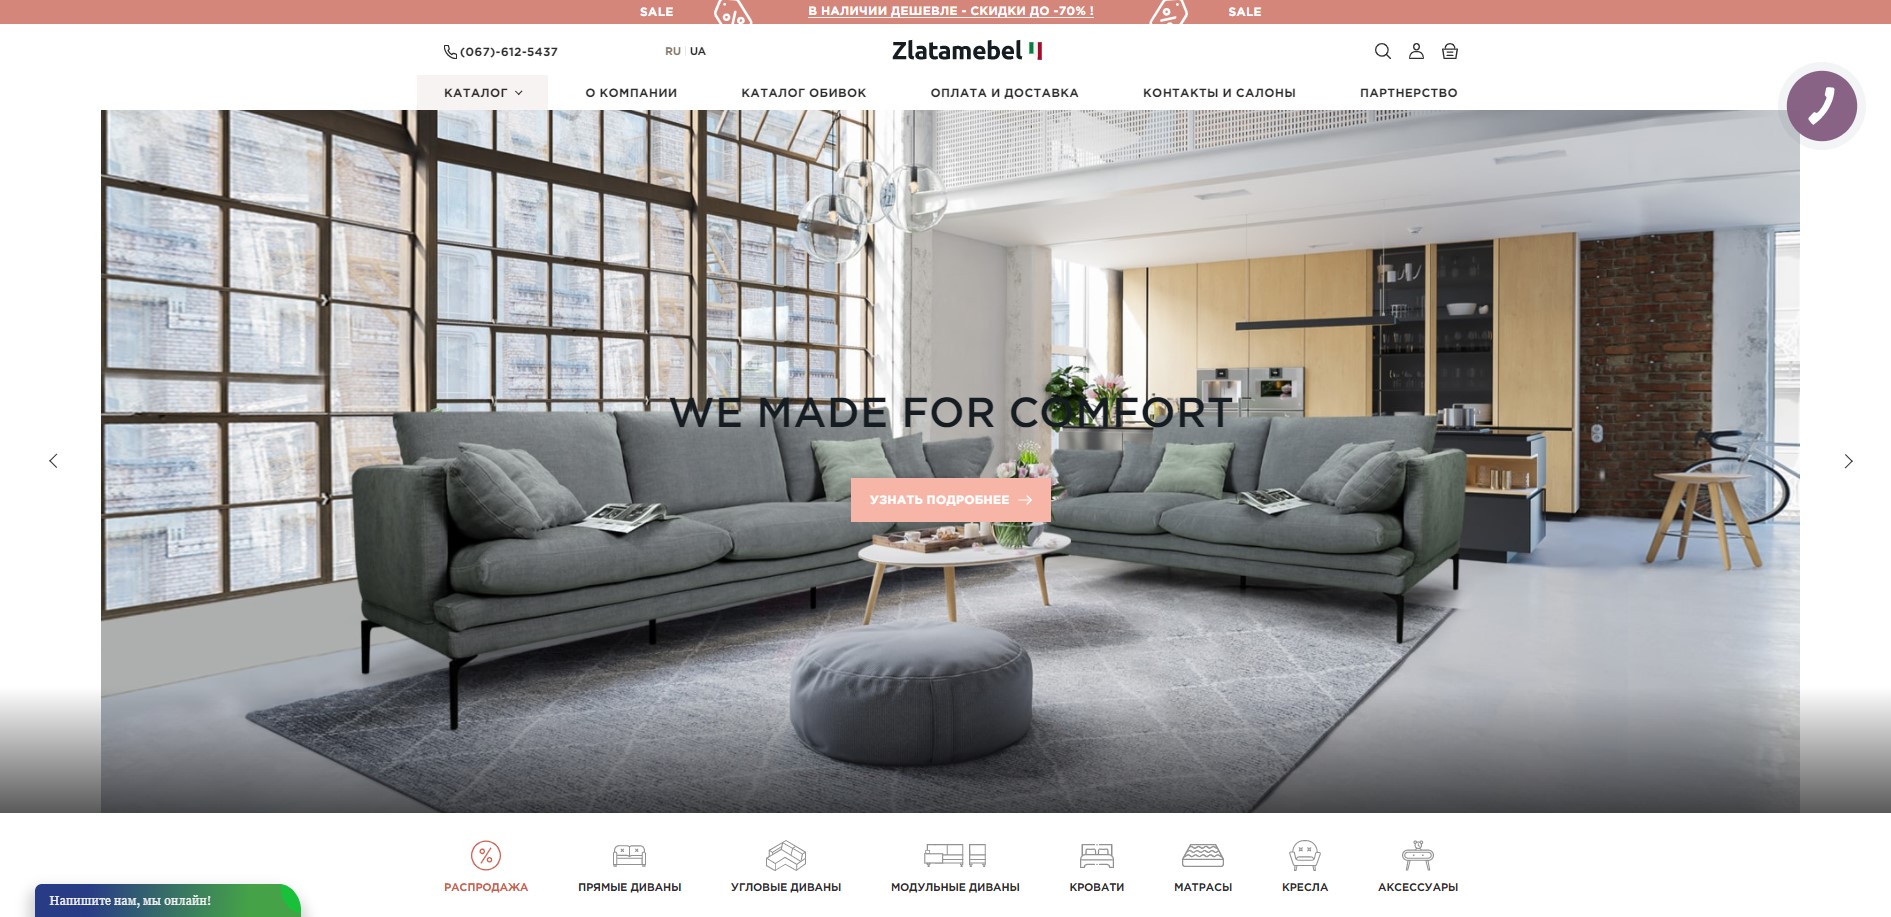 Corporate website with Zlatamebel catalog